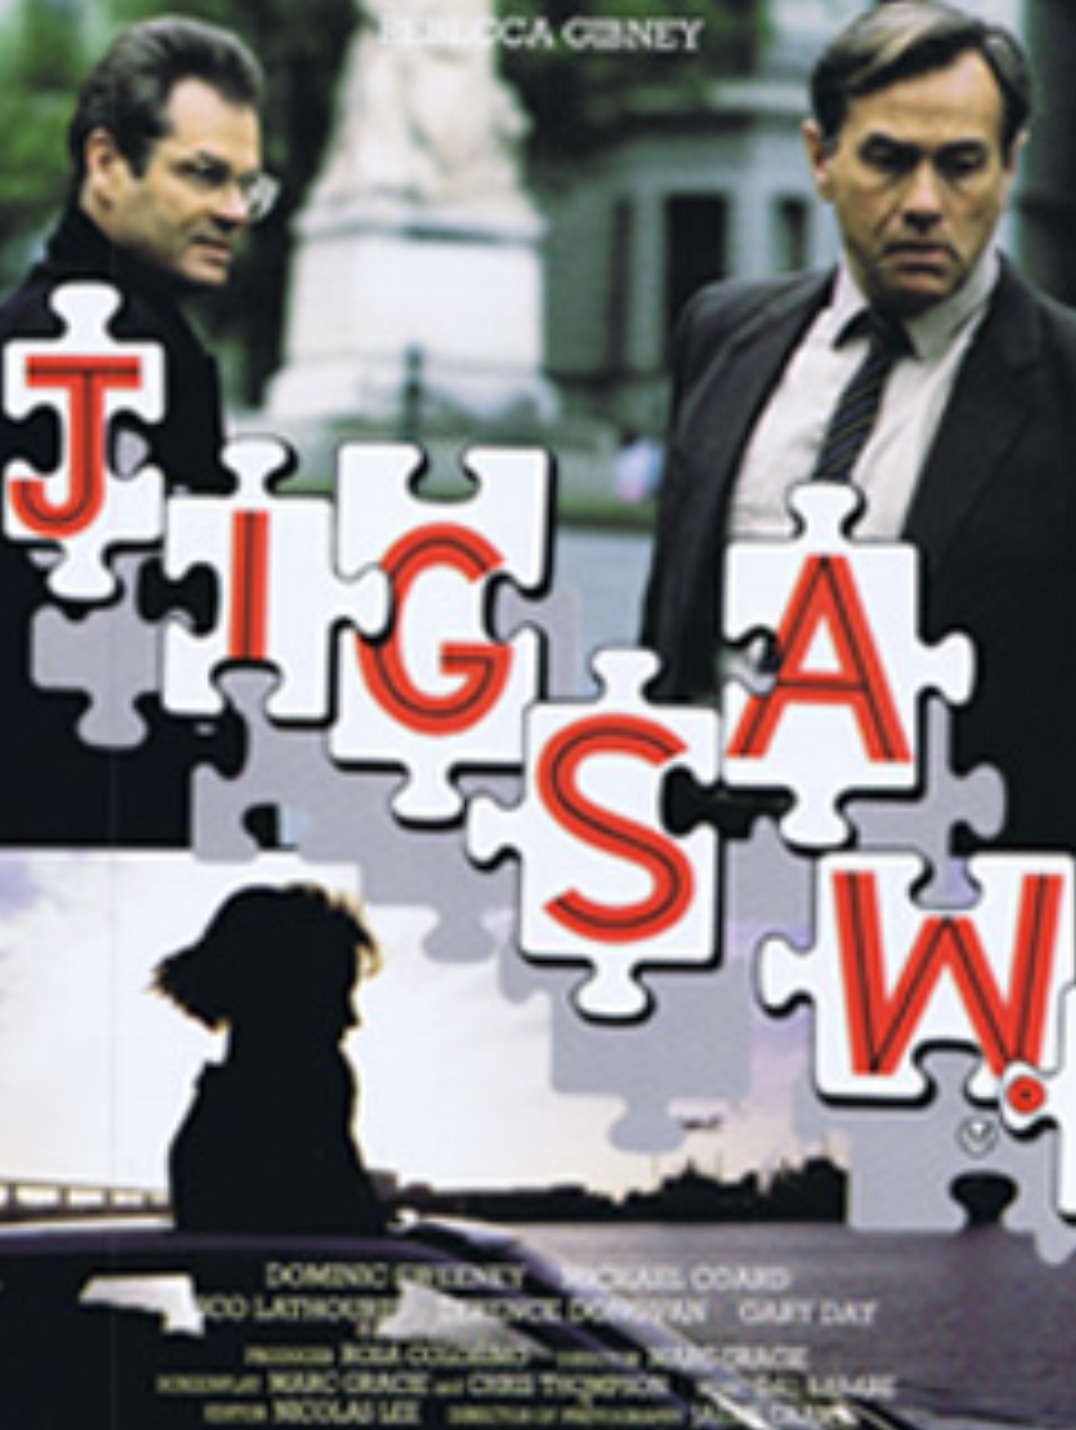 Jigsaw (1990) Screenshot 2 